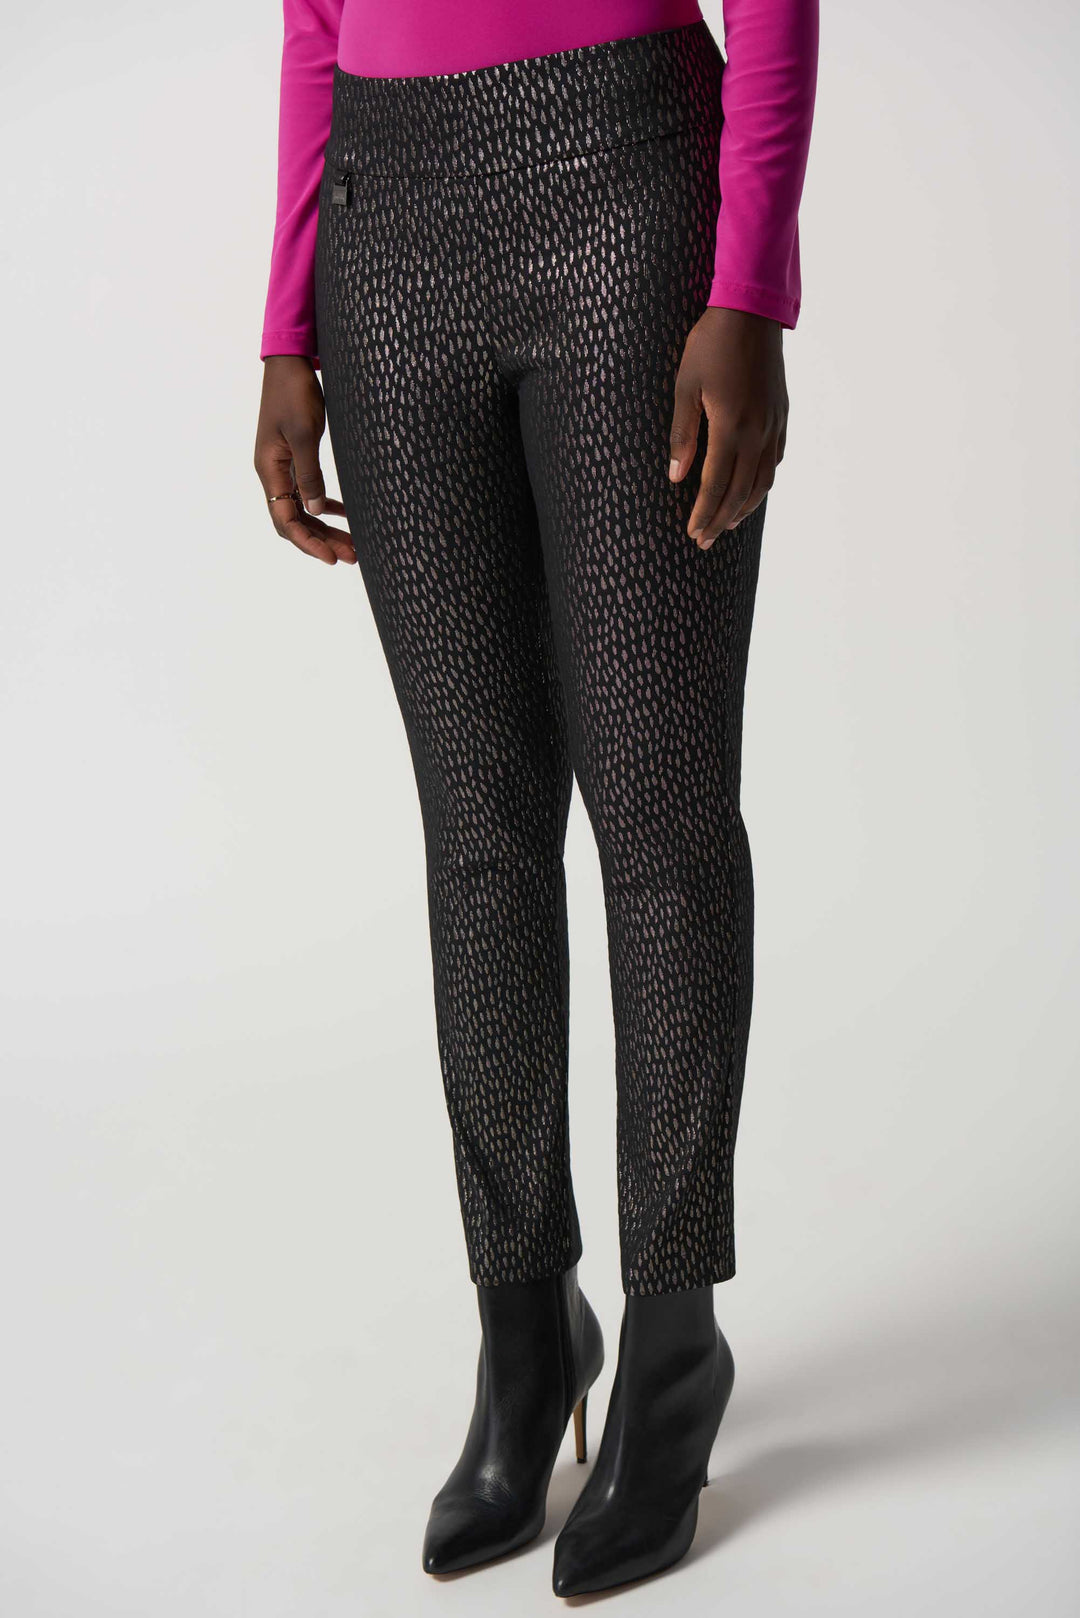 "Joseph Ribkoff Black/Bronze Slim-Fit Pants Style 233191"